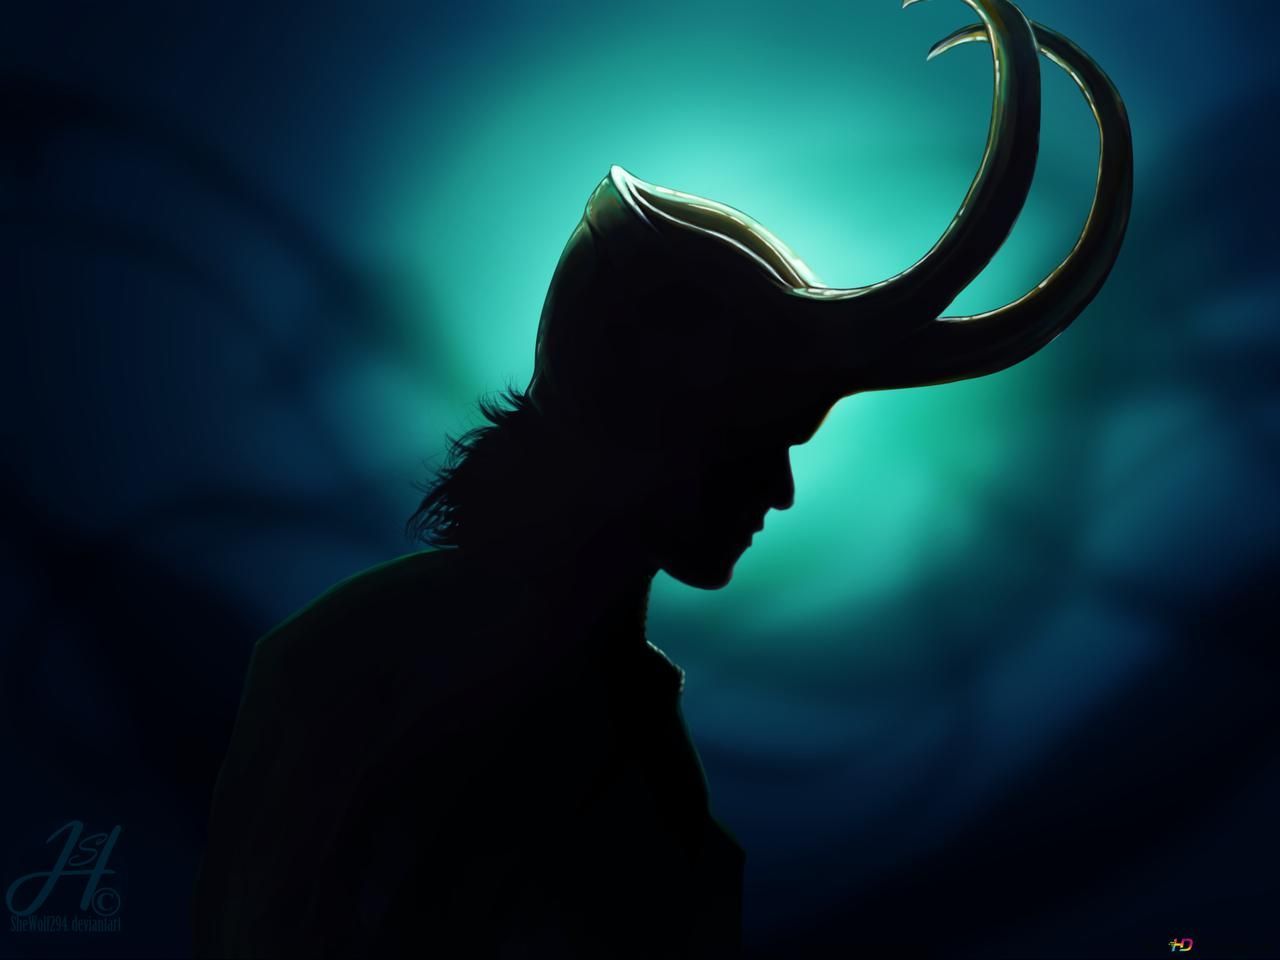 Shady View Of Devil Loki 2K wallpaper download